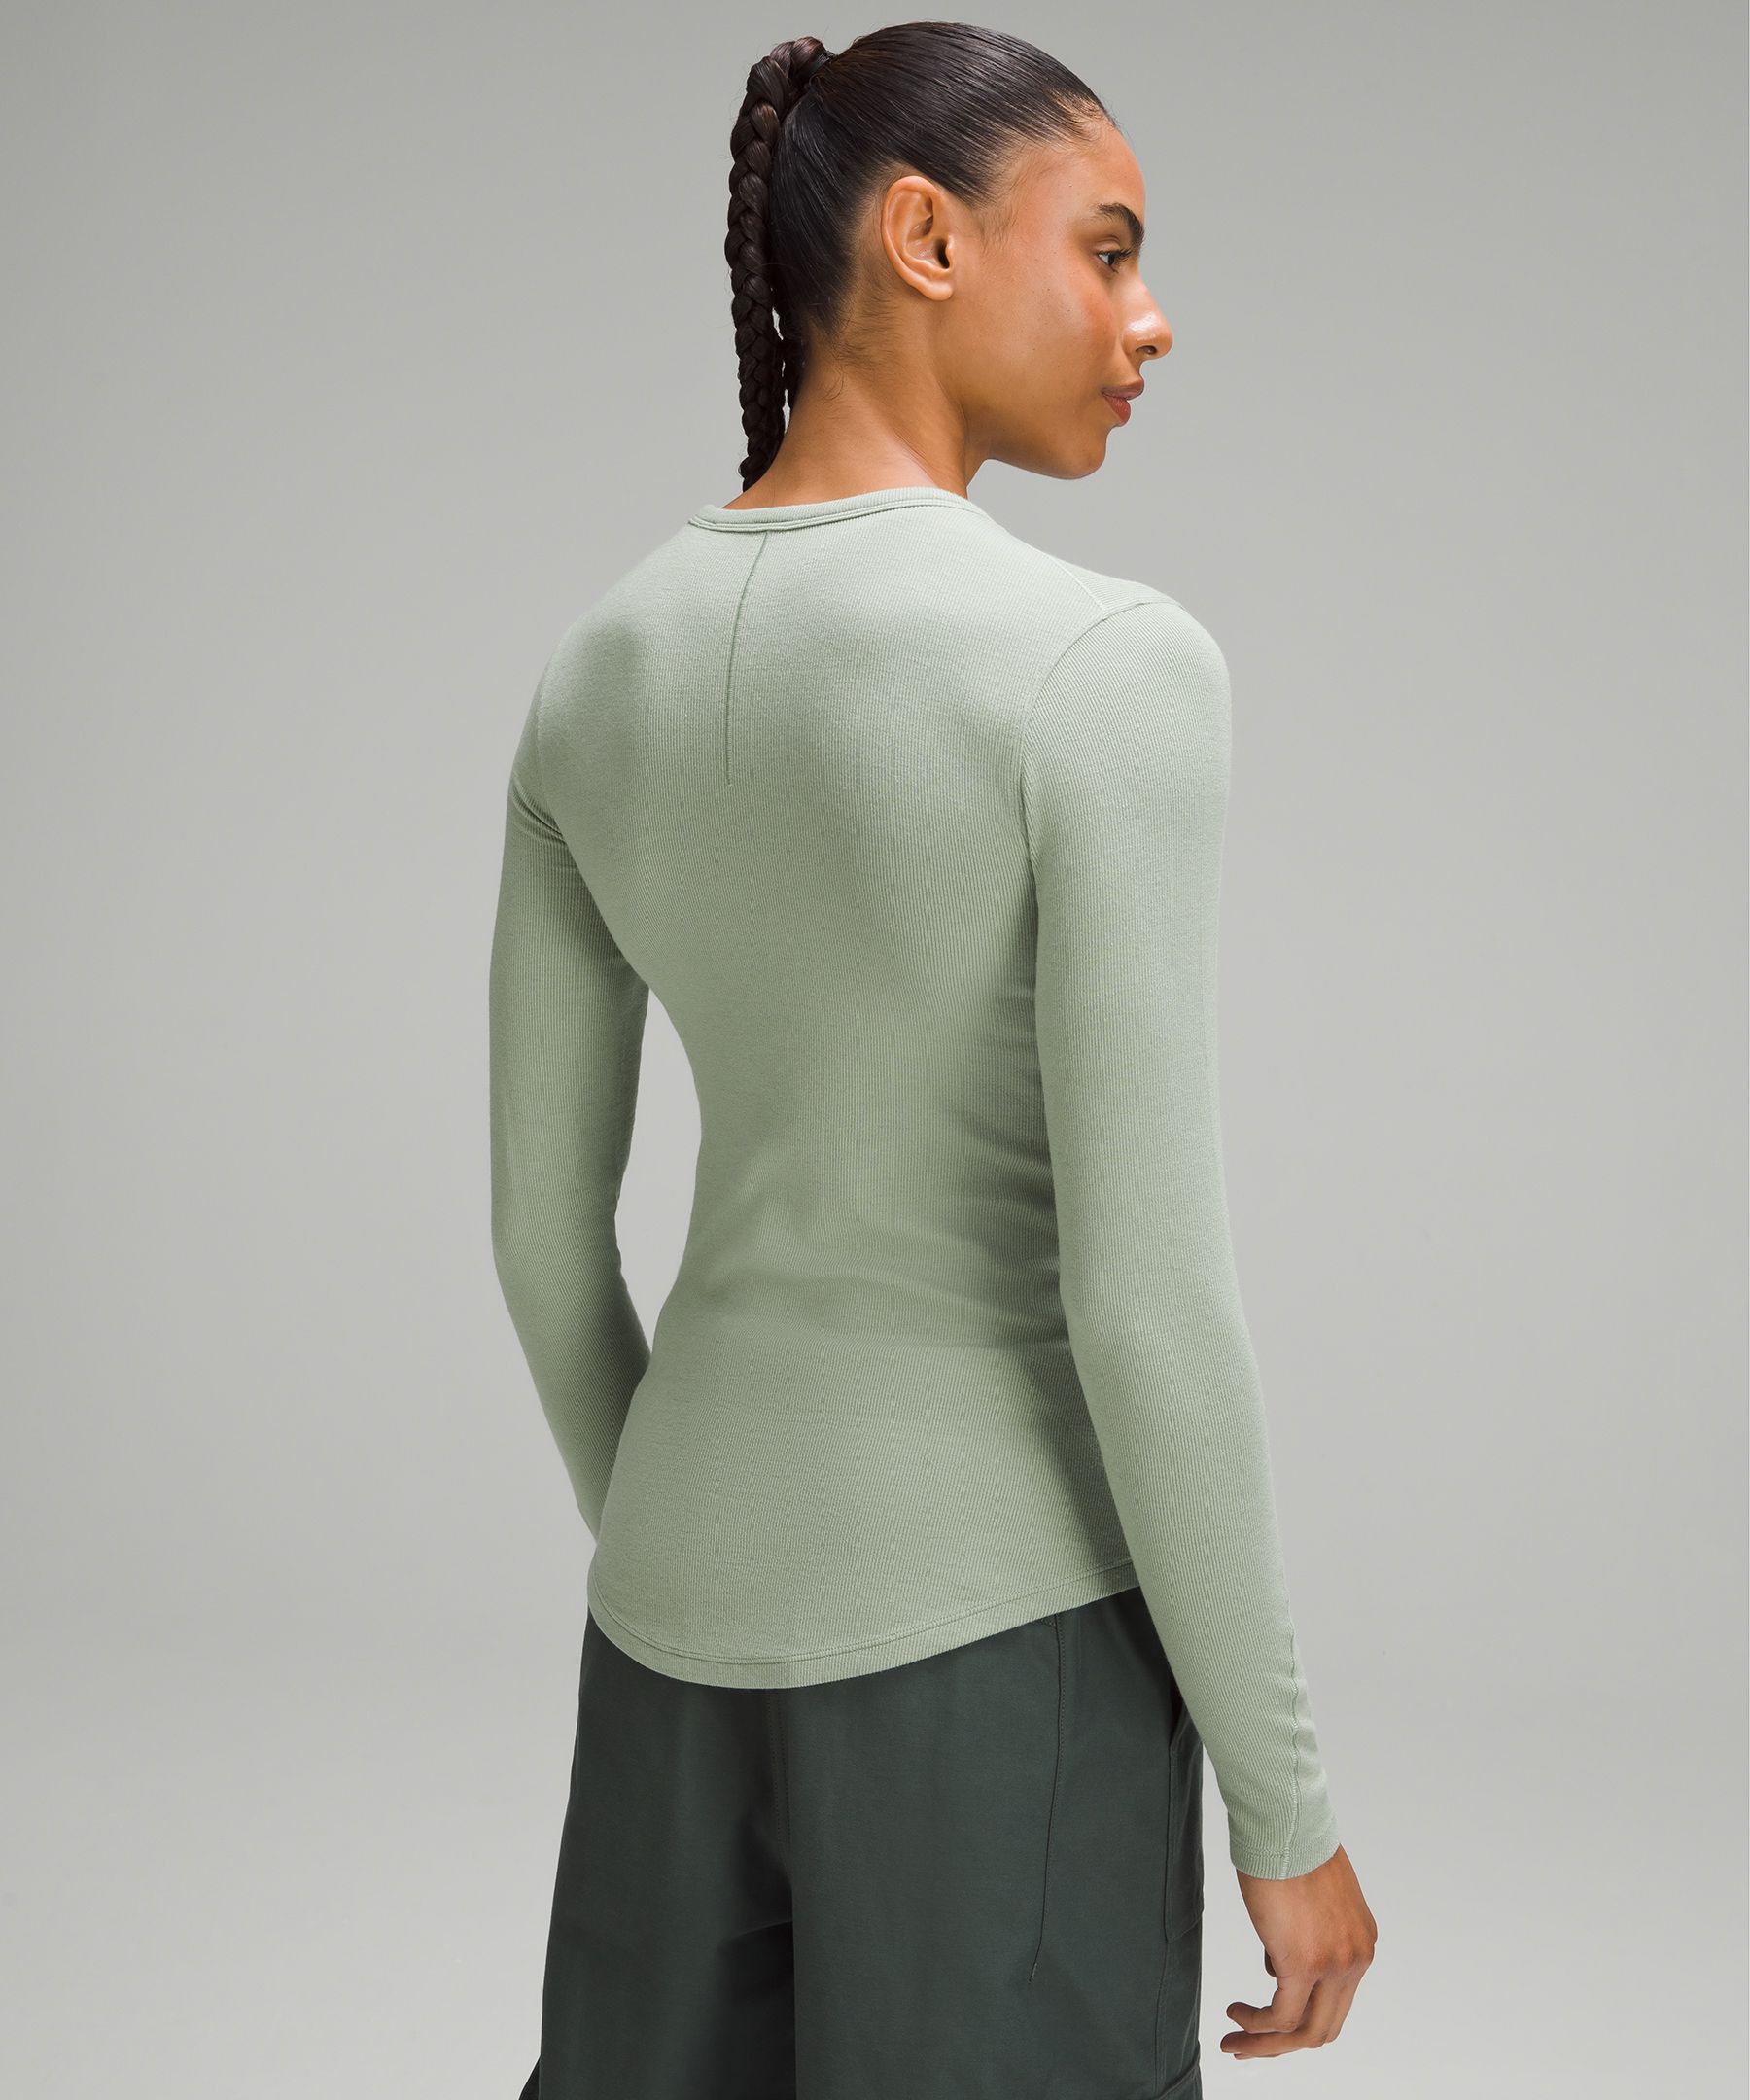 Lululemon Hold Tight Long-Sleeve Shirt - Pastel/Green Ribbed Modal Fabric